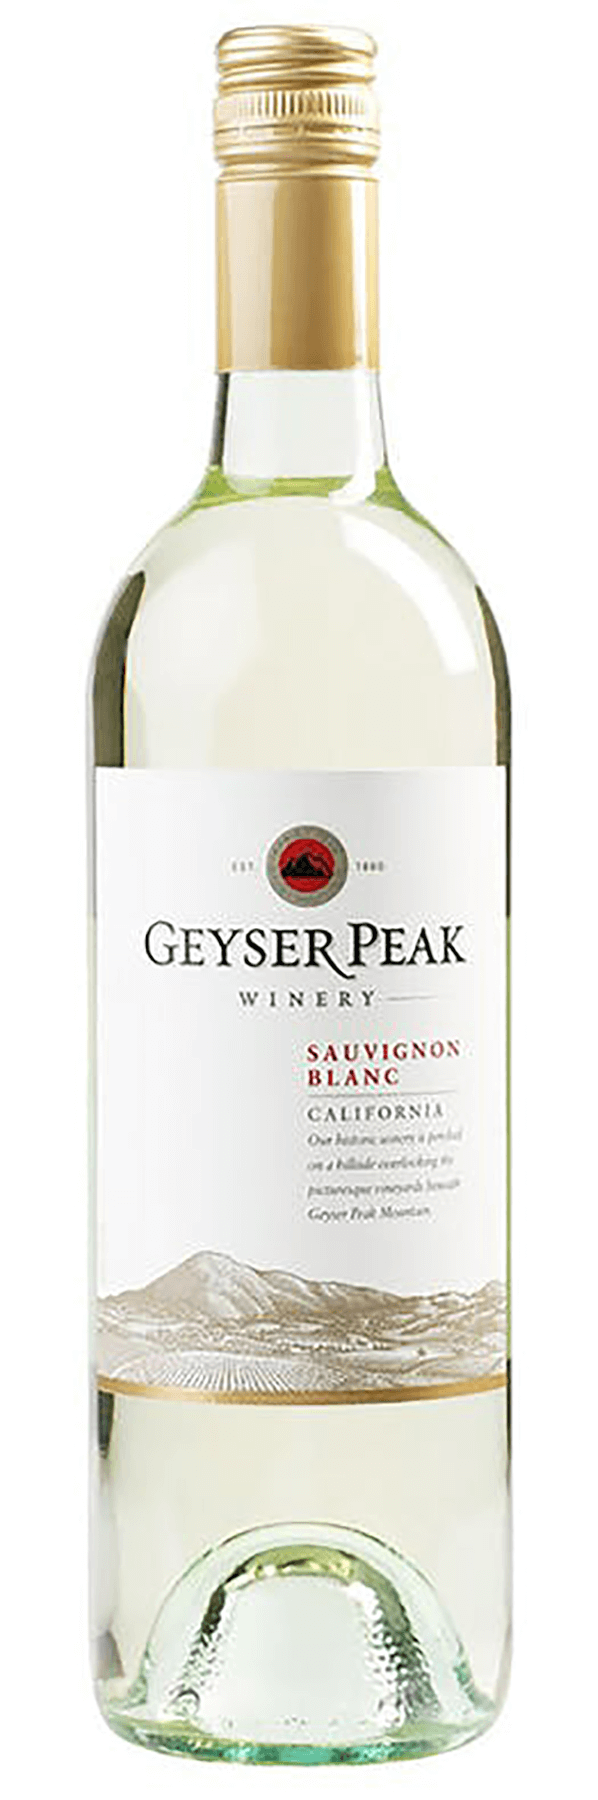 Geyser Peak Winery Sauvignon Blanc 2014